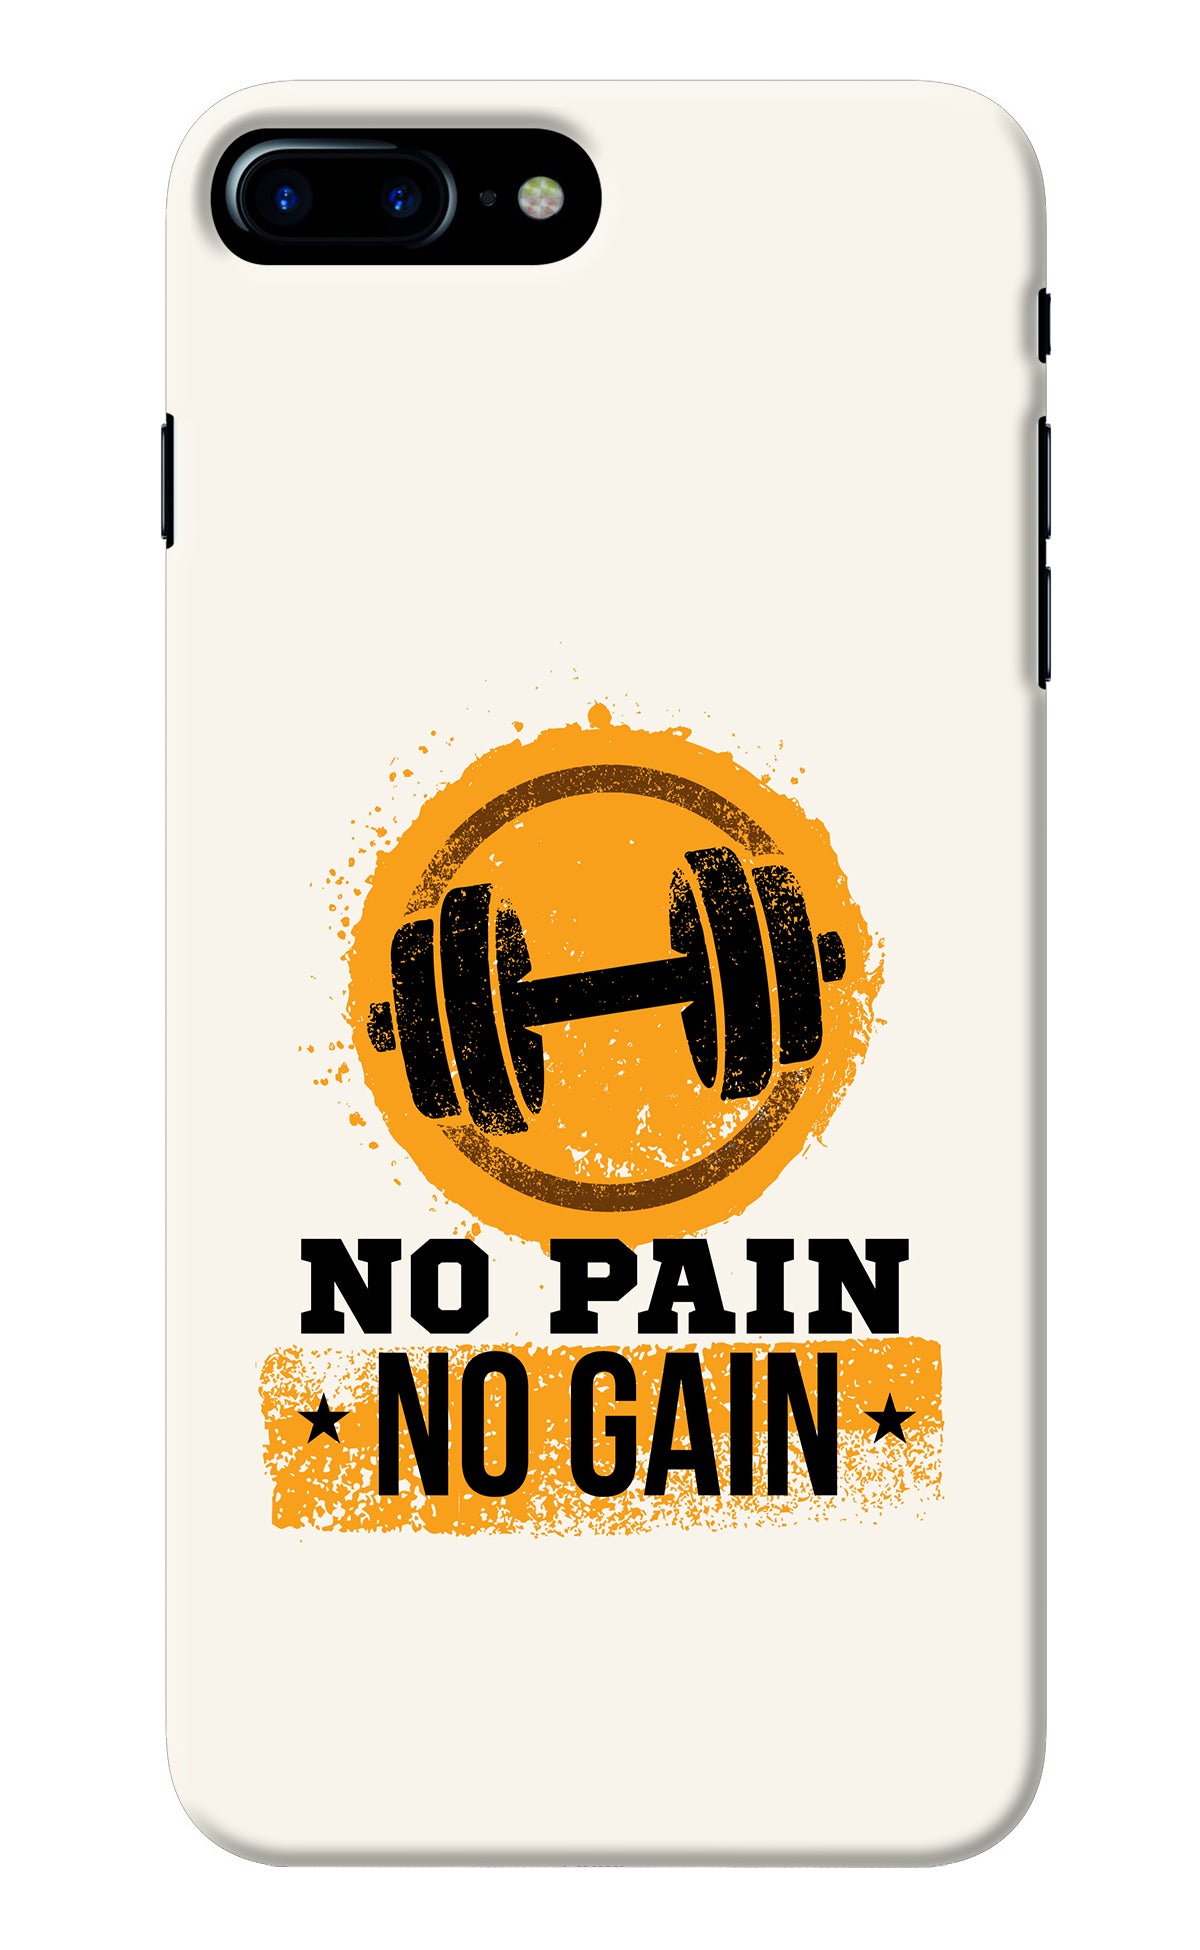 No Pain No Gain iPhone 7 Plus Back Cover